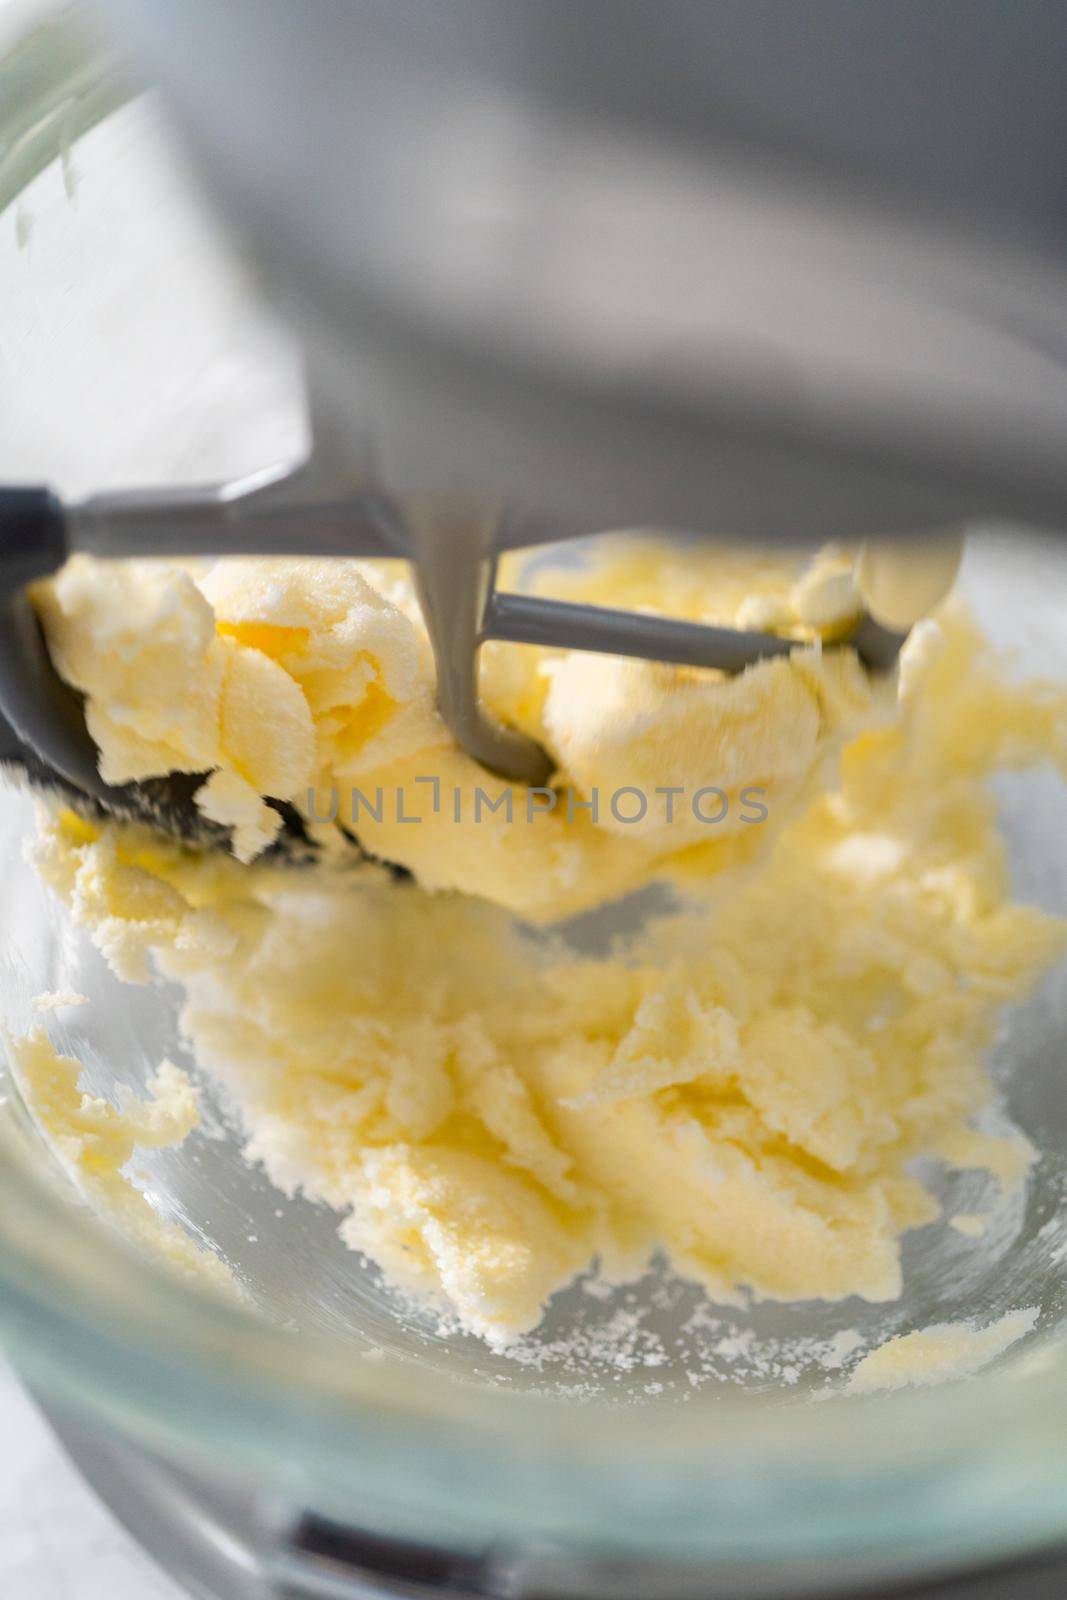 Lemon wedge cookies with lemon glaze. Mixing ingredients in kitchen mixer to bake lemon wedge cookies with lemon glaze.